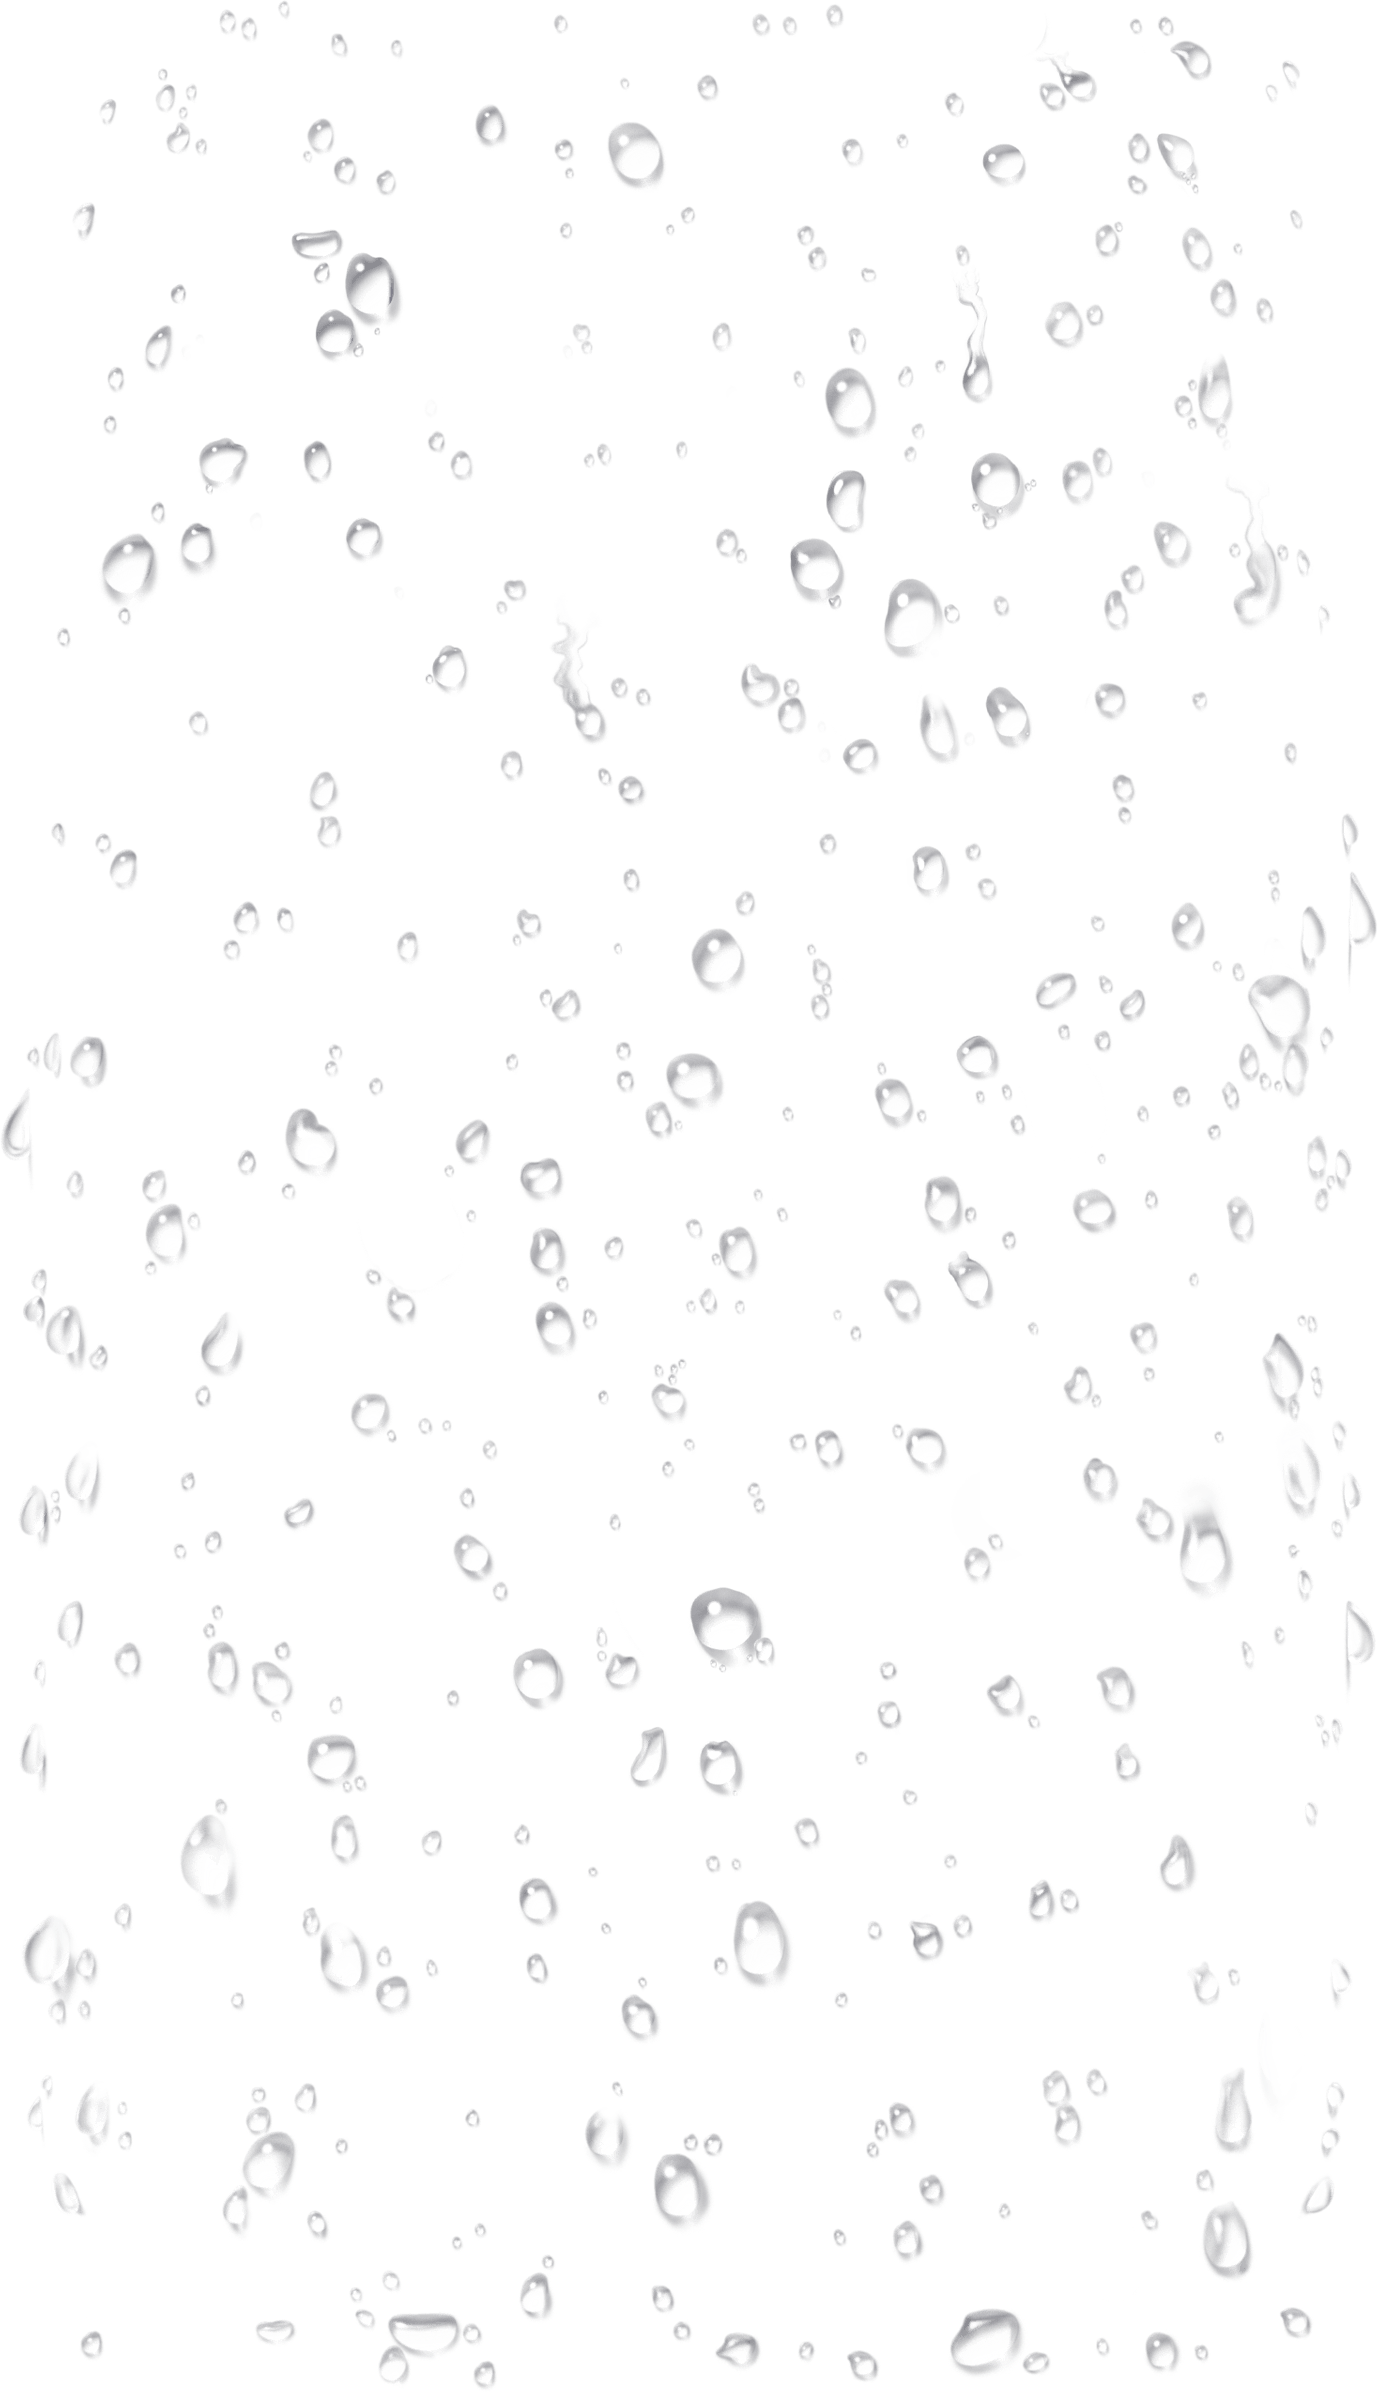 Water Drops Png Image PNG Image